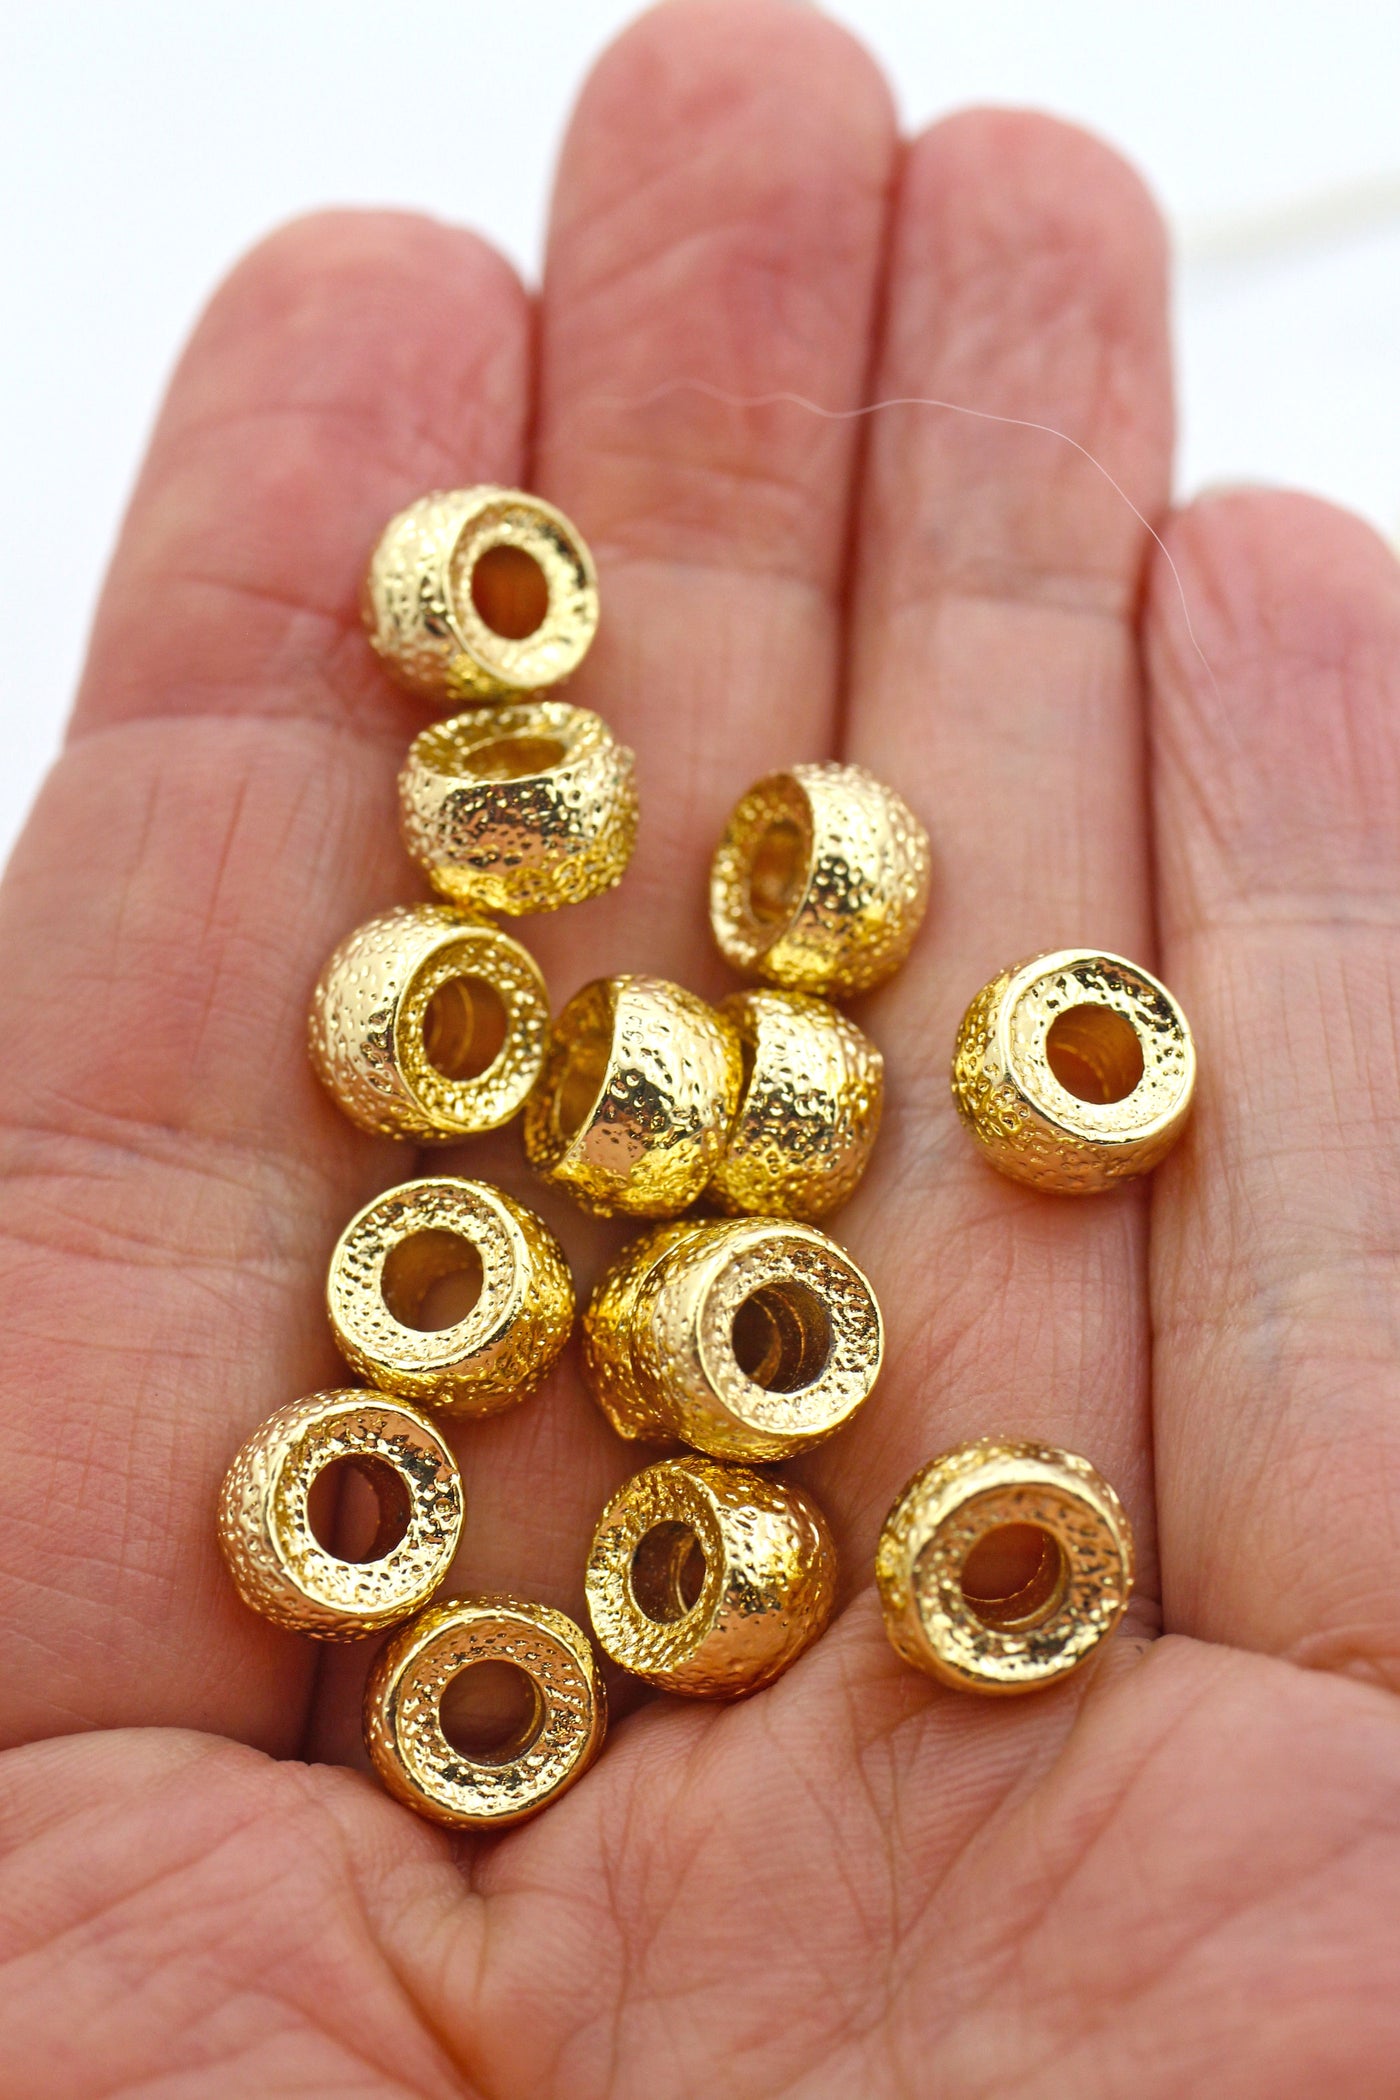 100 Gold Tone Metallic Acrylic Round Pony Beads 10X8mm Big Hole Spacer